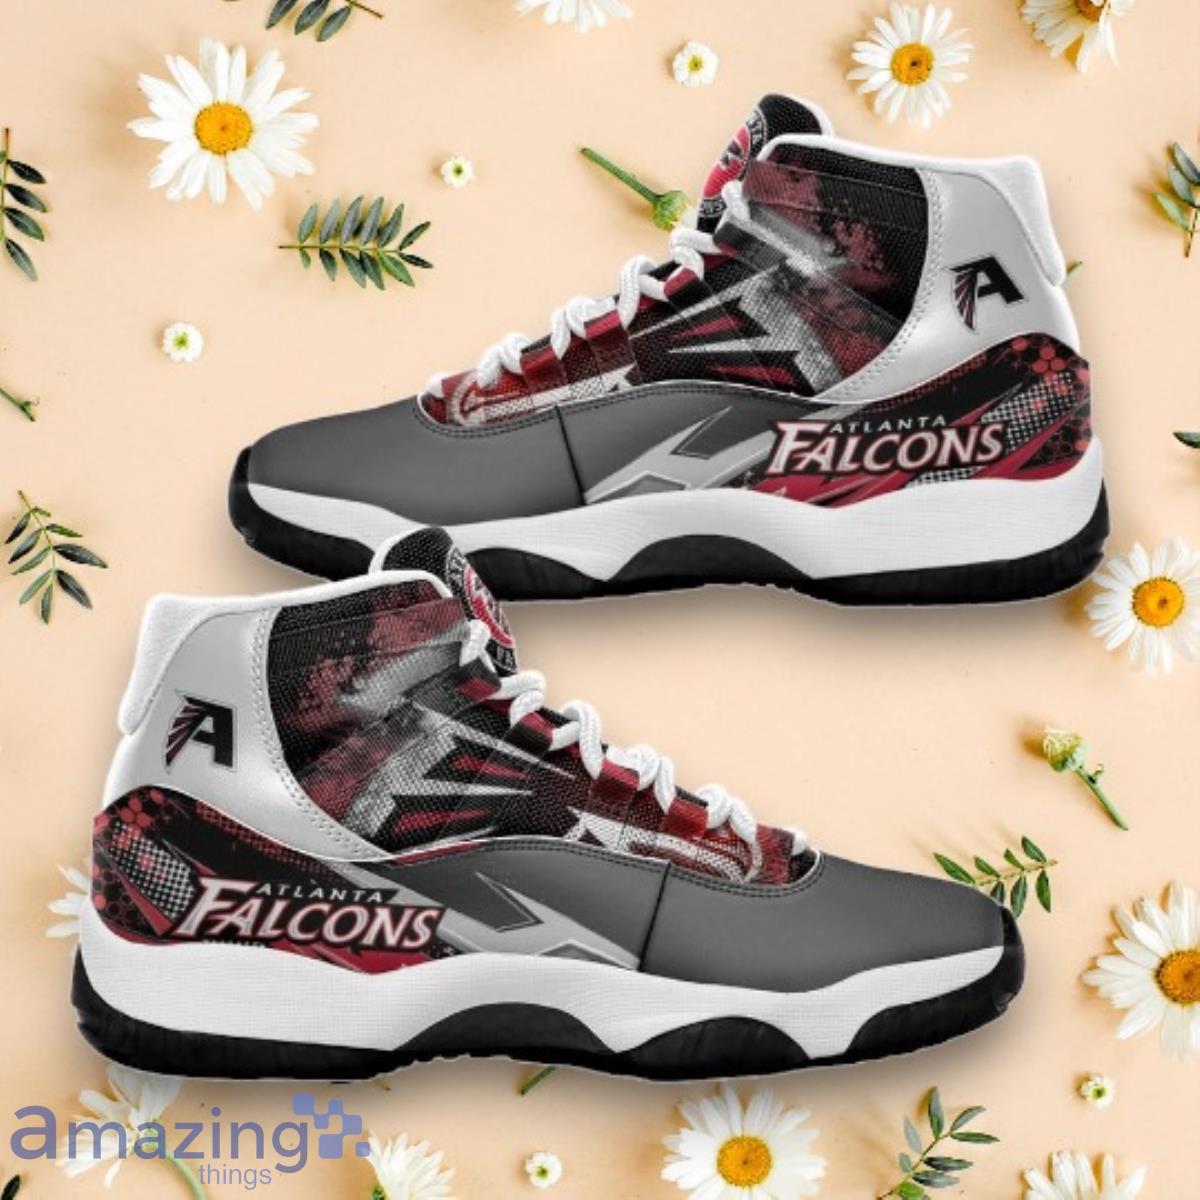 Atlanta Falcons Air Jordan 11 Sneakers Style Gifts For Men Women Product Photo 1